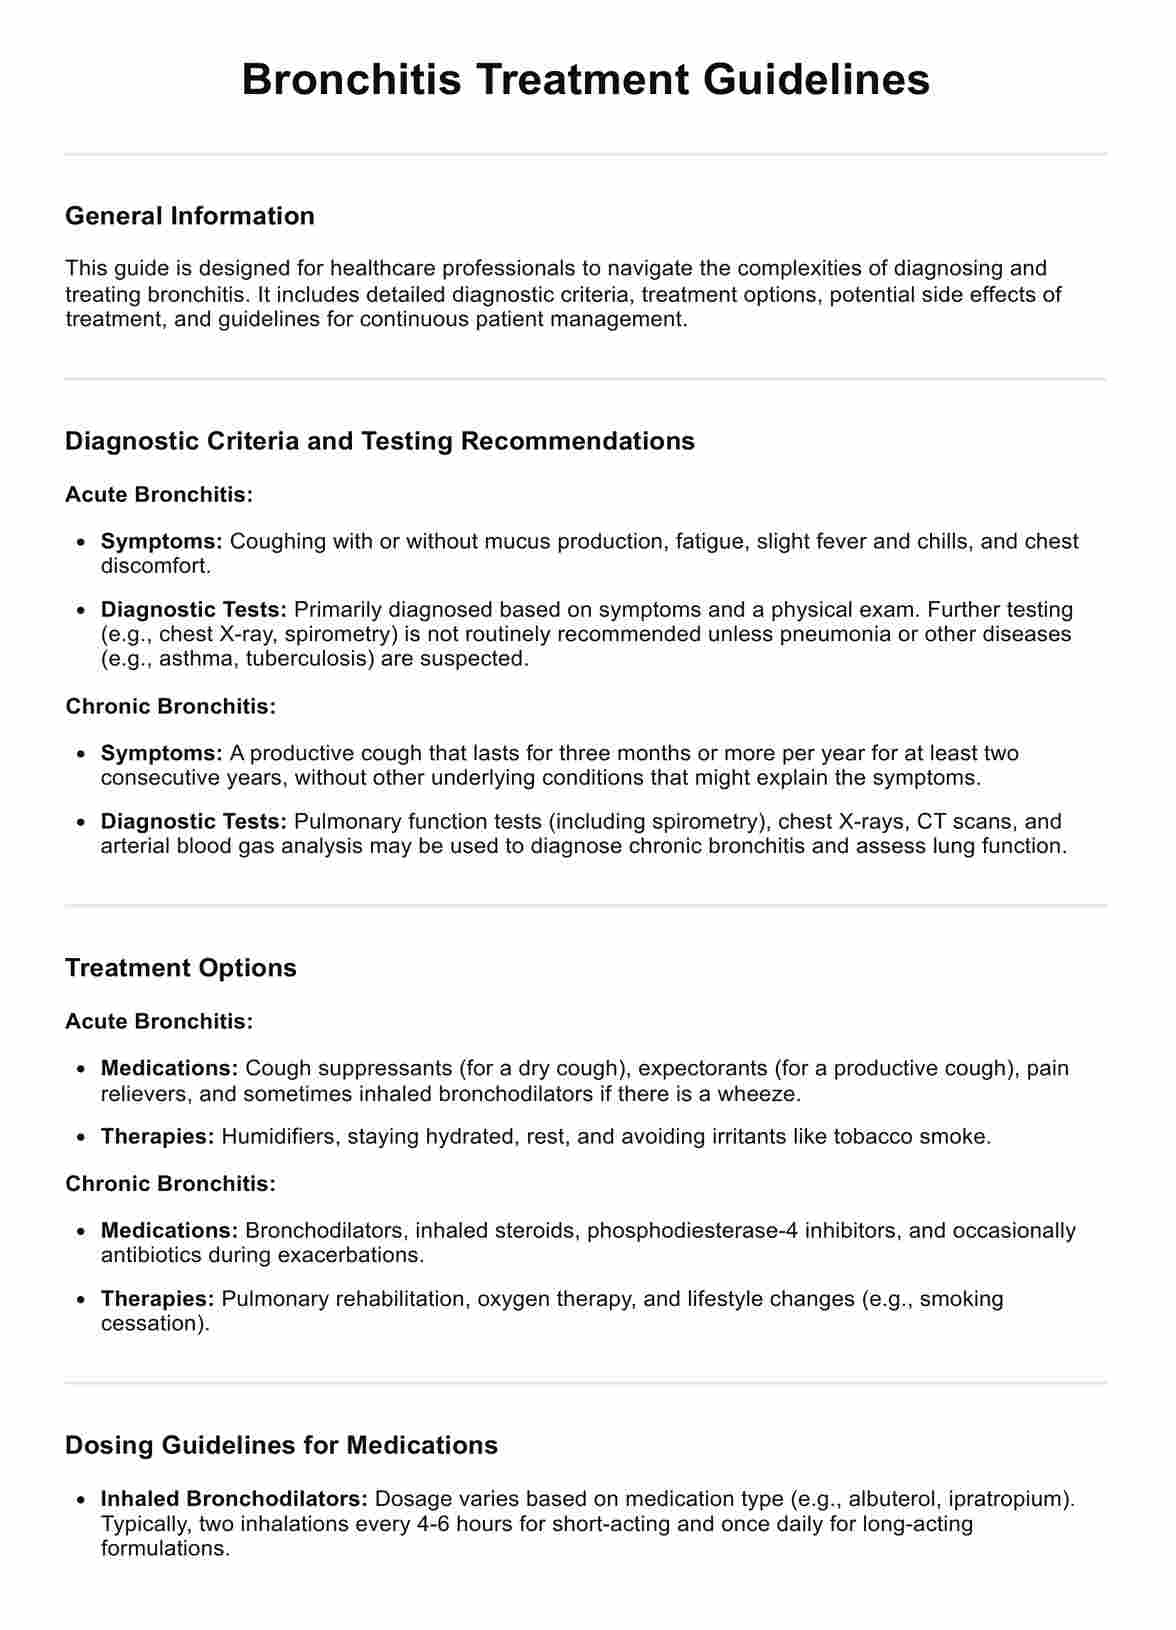 Bronchitis Treatment Guidelines PDF Example